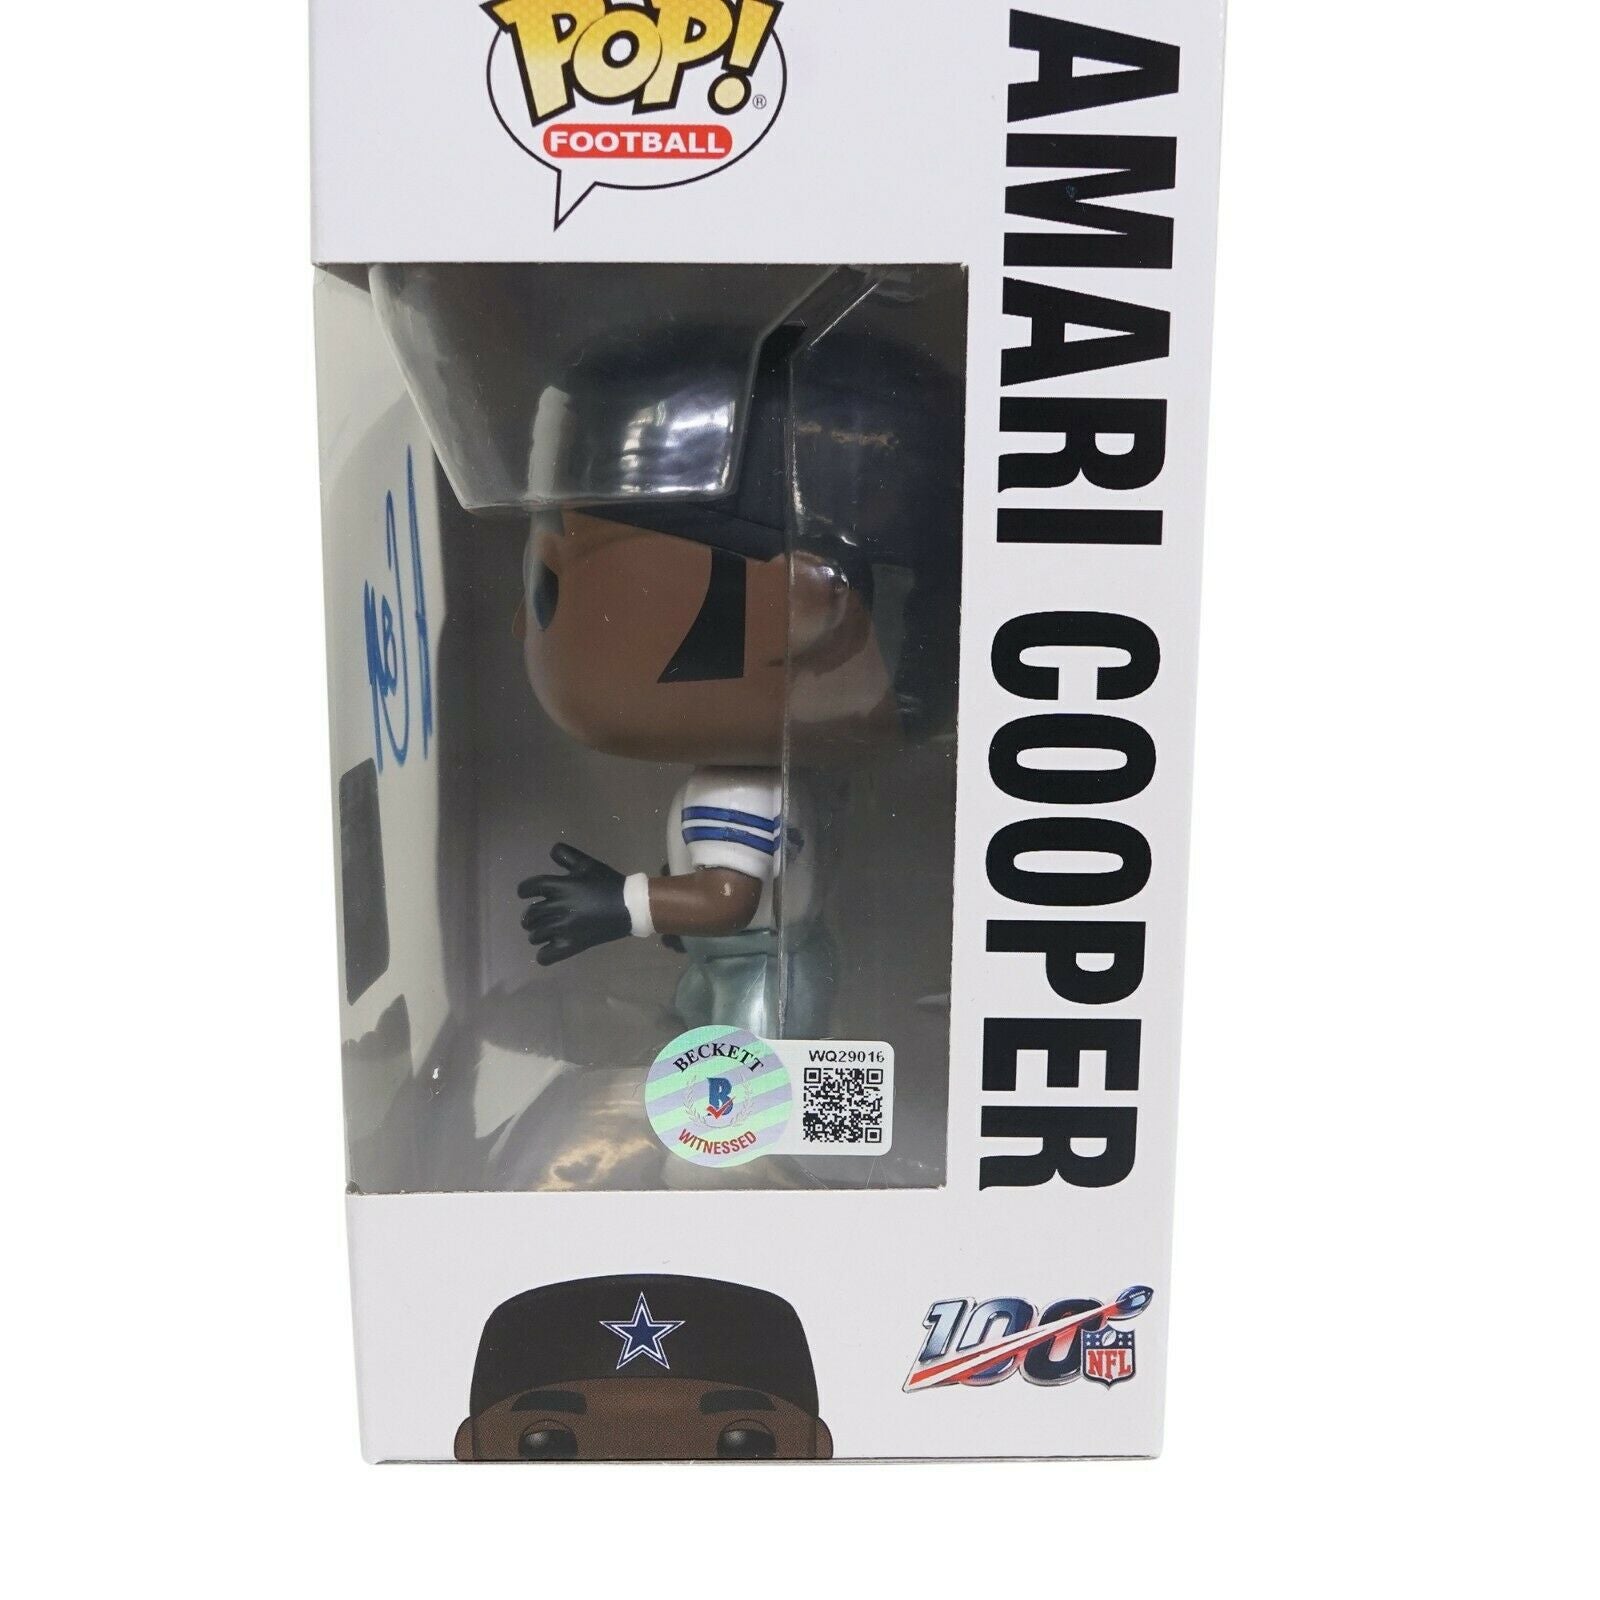 [Autographed] NFL Cowboys #124 Amari Cooper Pop! Vinyl Figure